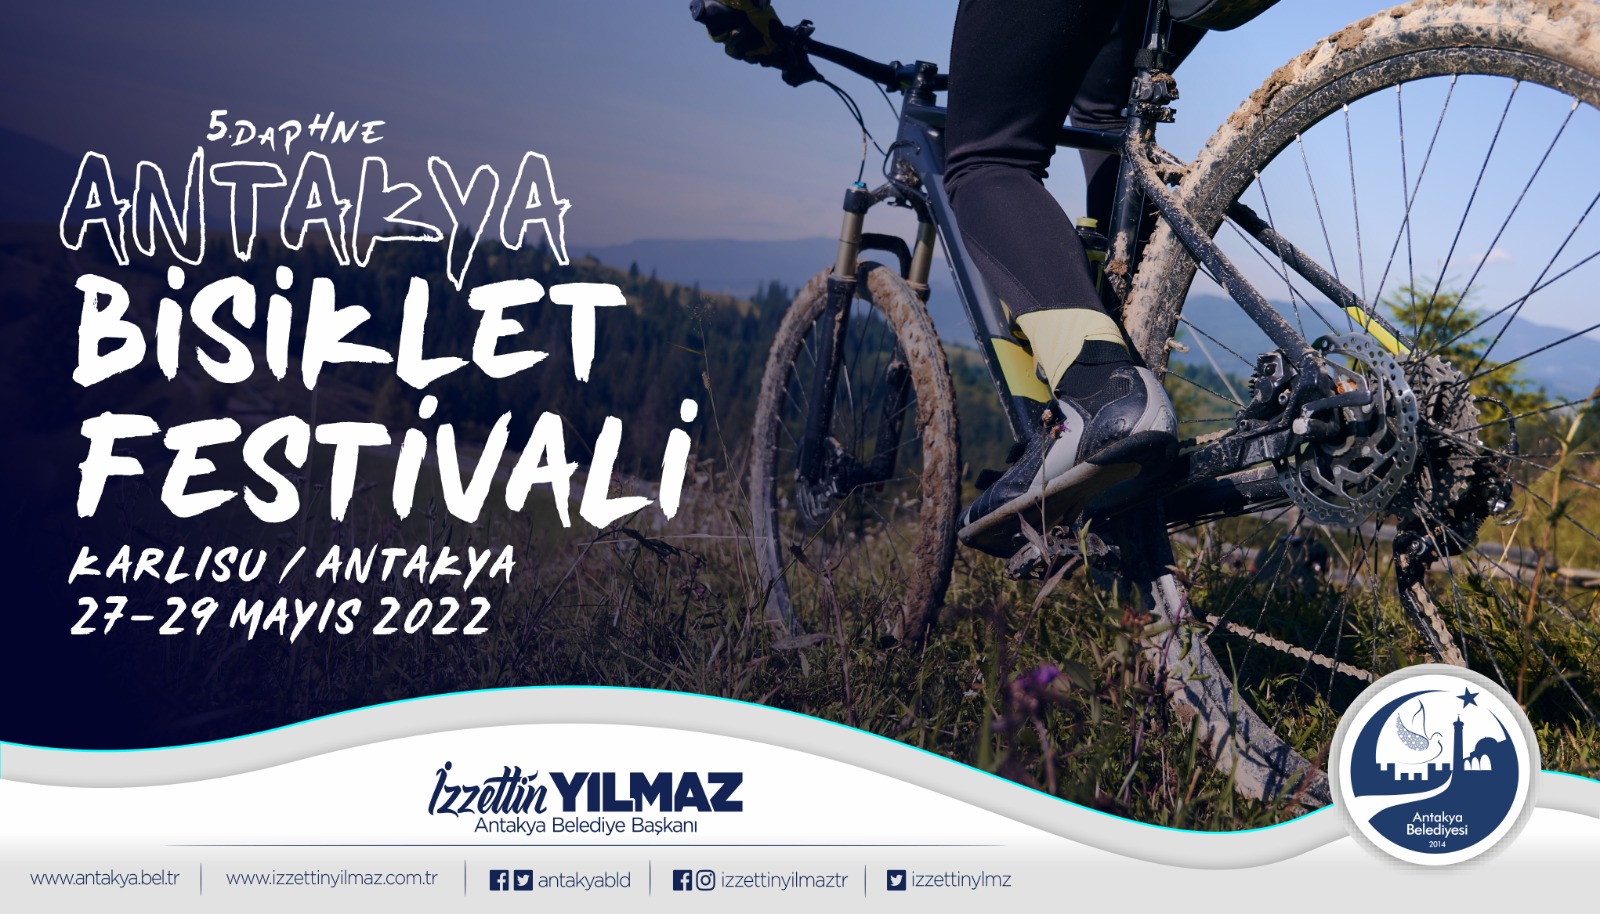 Antakya’da “Bisiklet Festivali” başlıyor